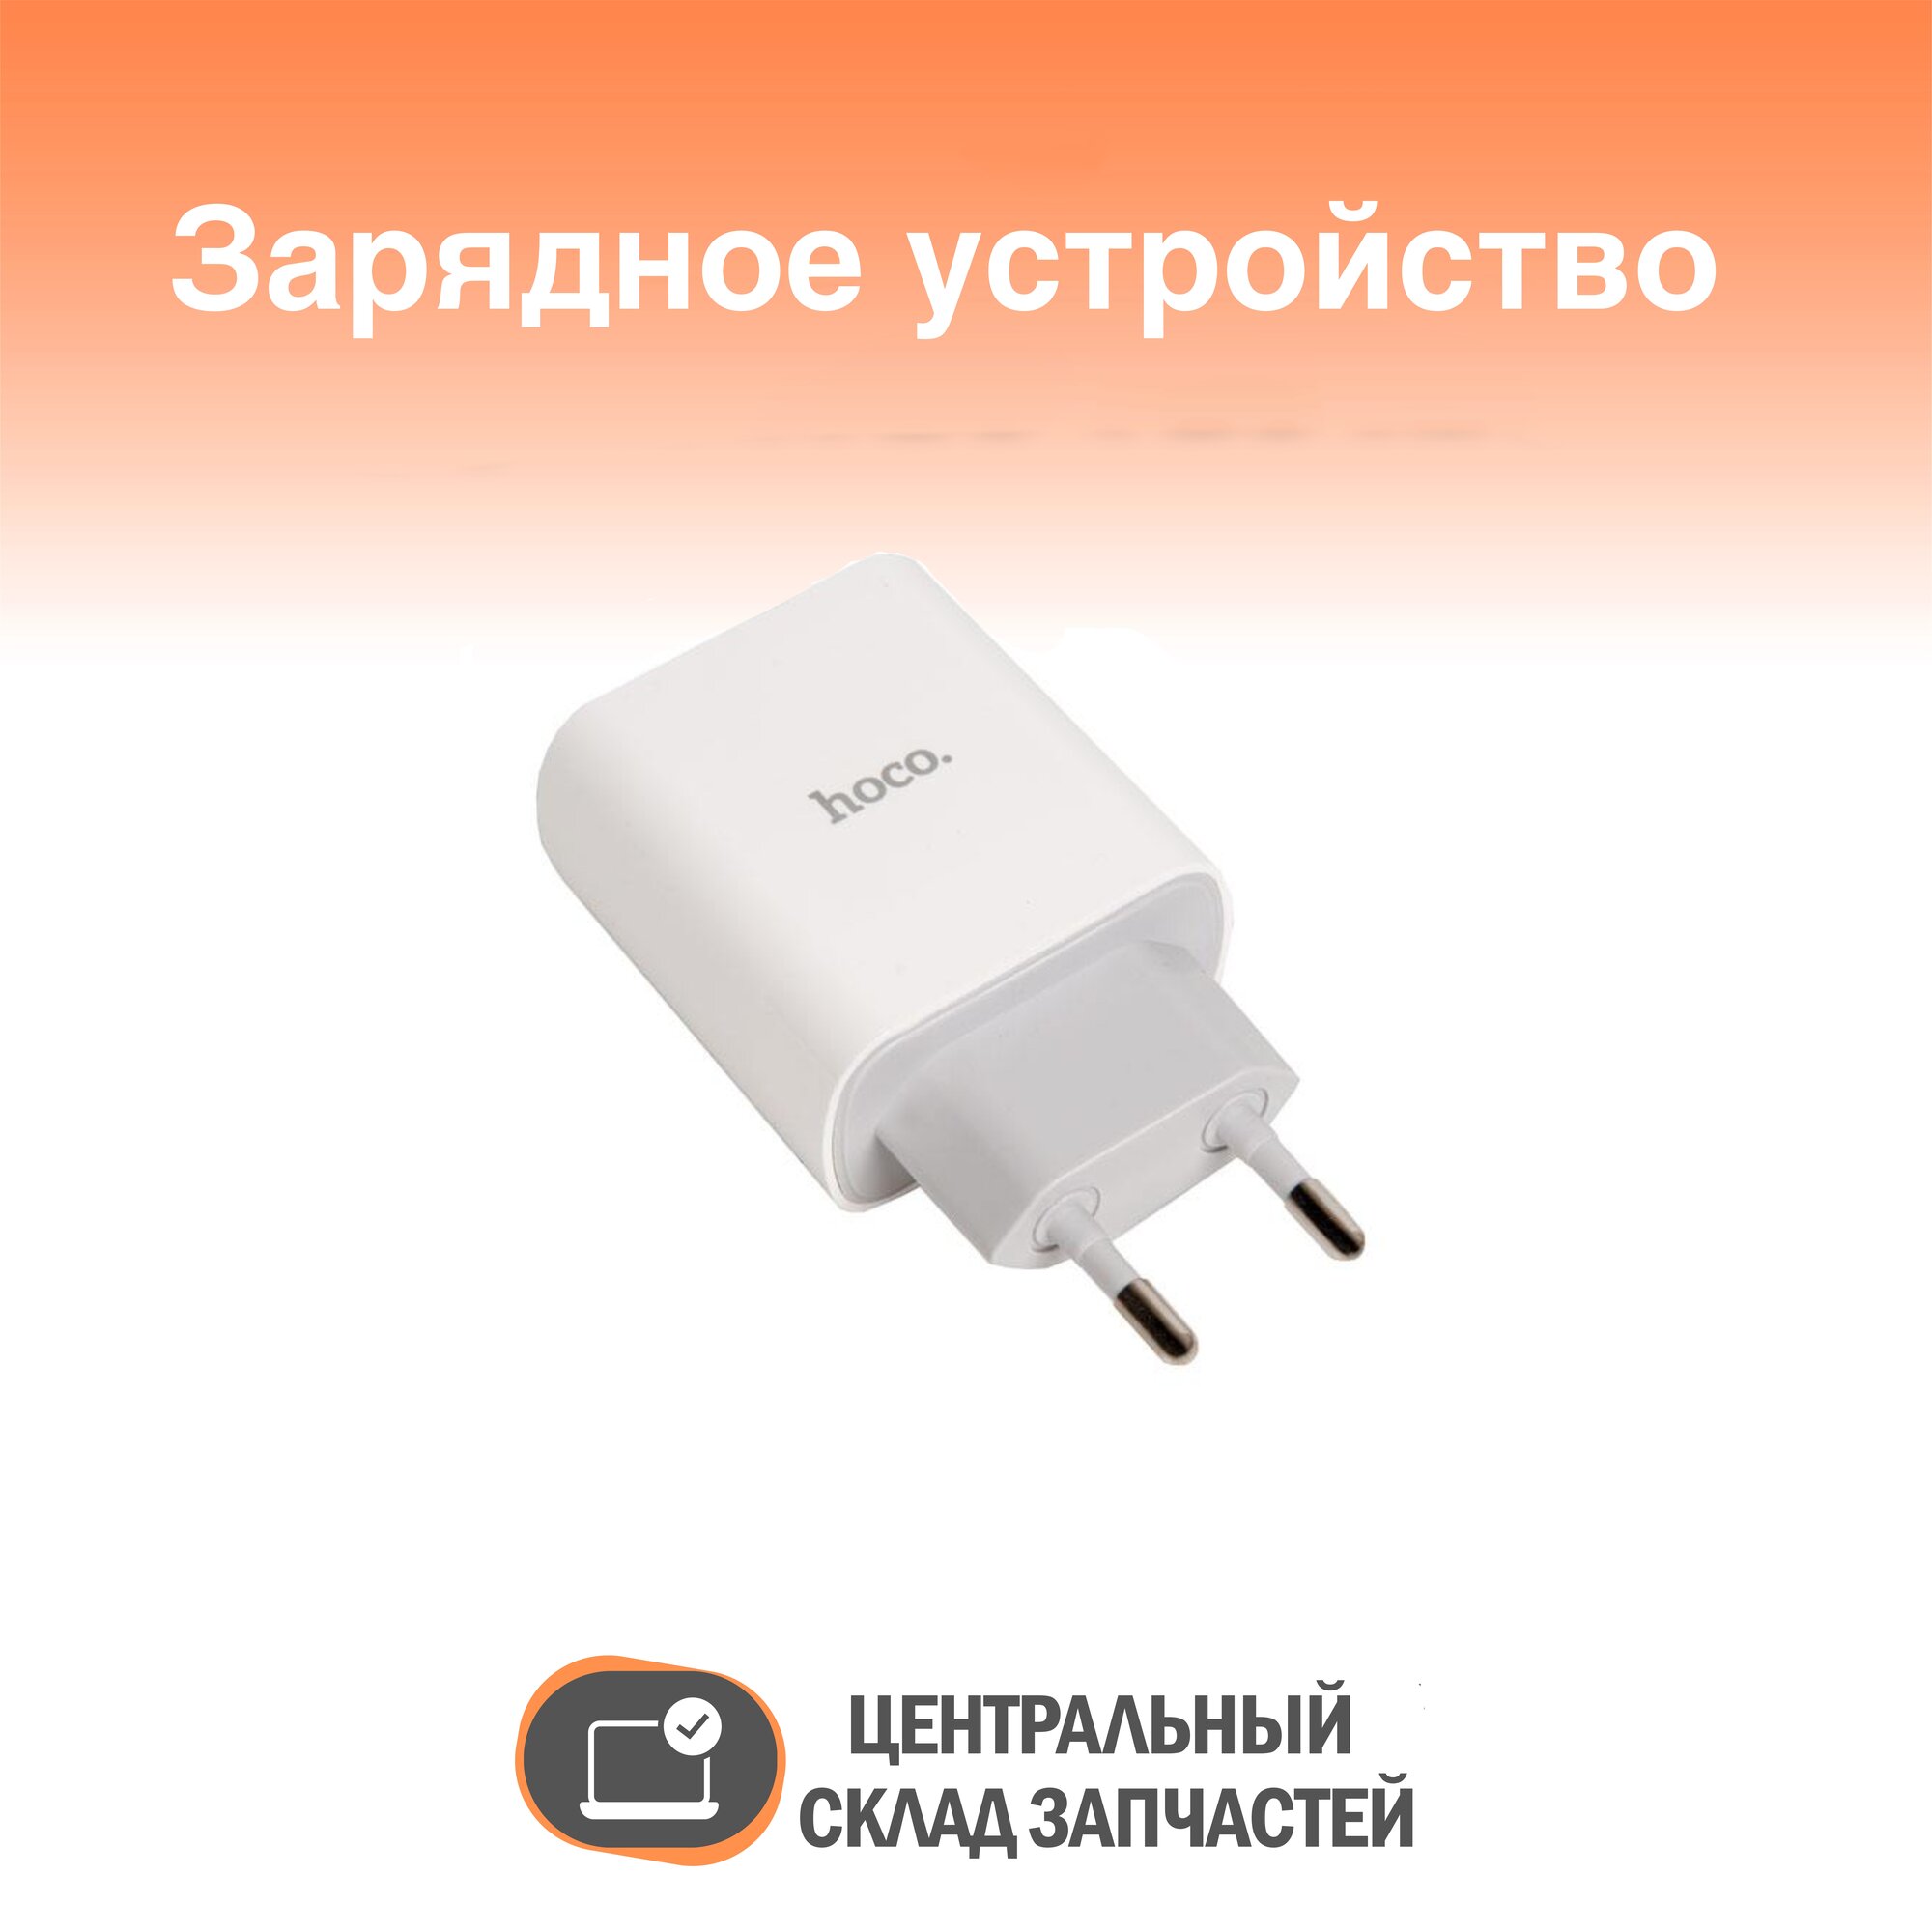 Battery charger / Зарядное устройство HOCO C80A Rapido PD20W+QC3.0 charger, type-c, usb (EU), белый